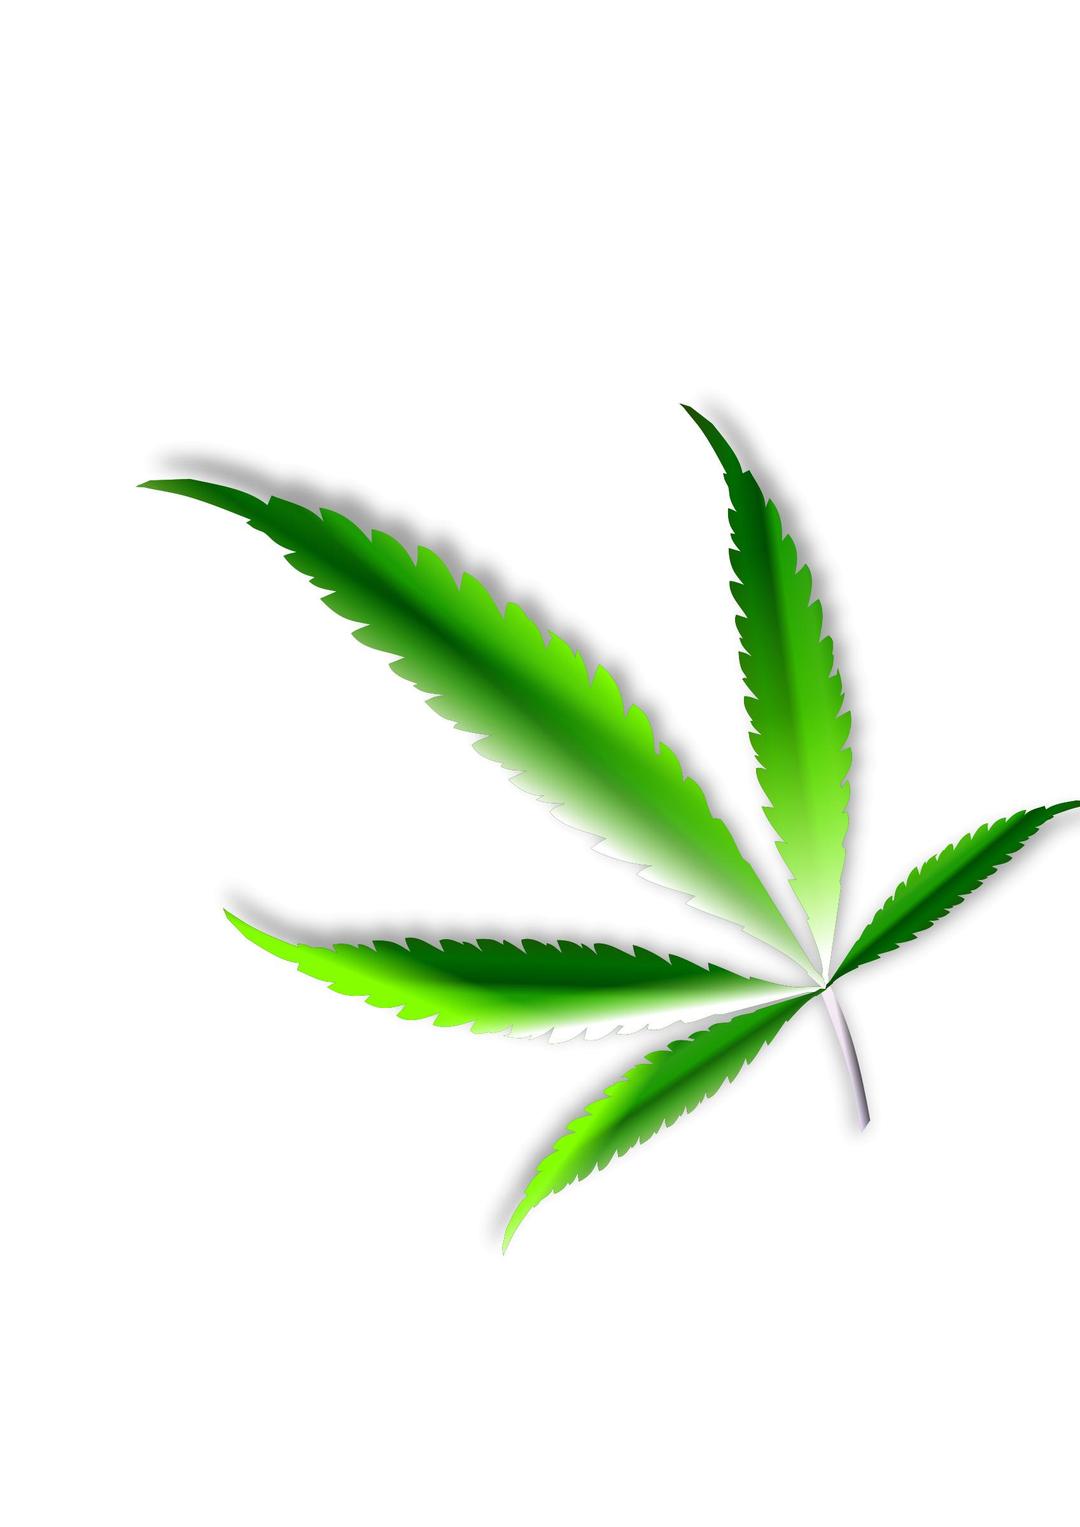  Cannabis leaf png transparent